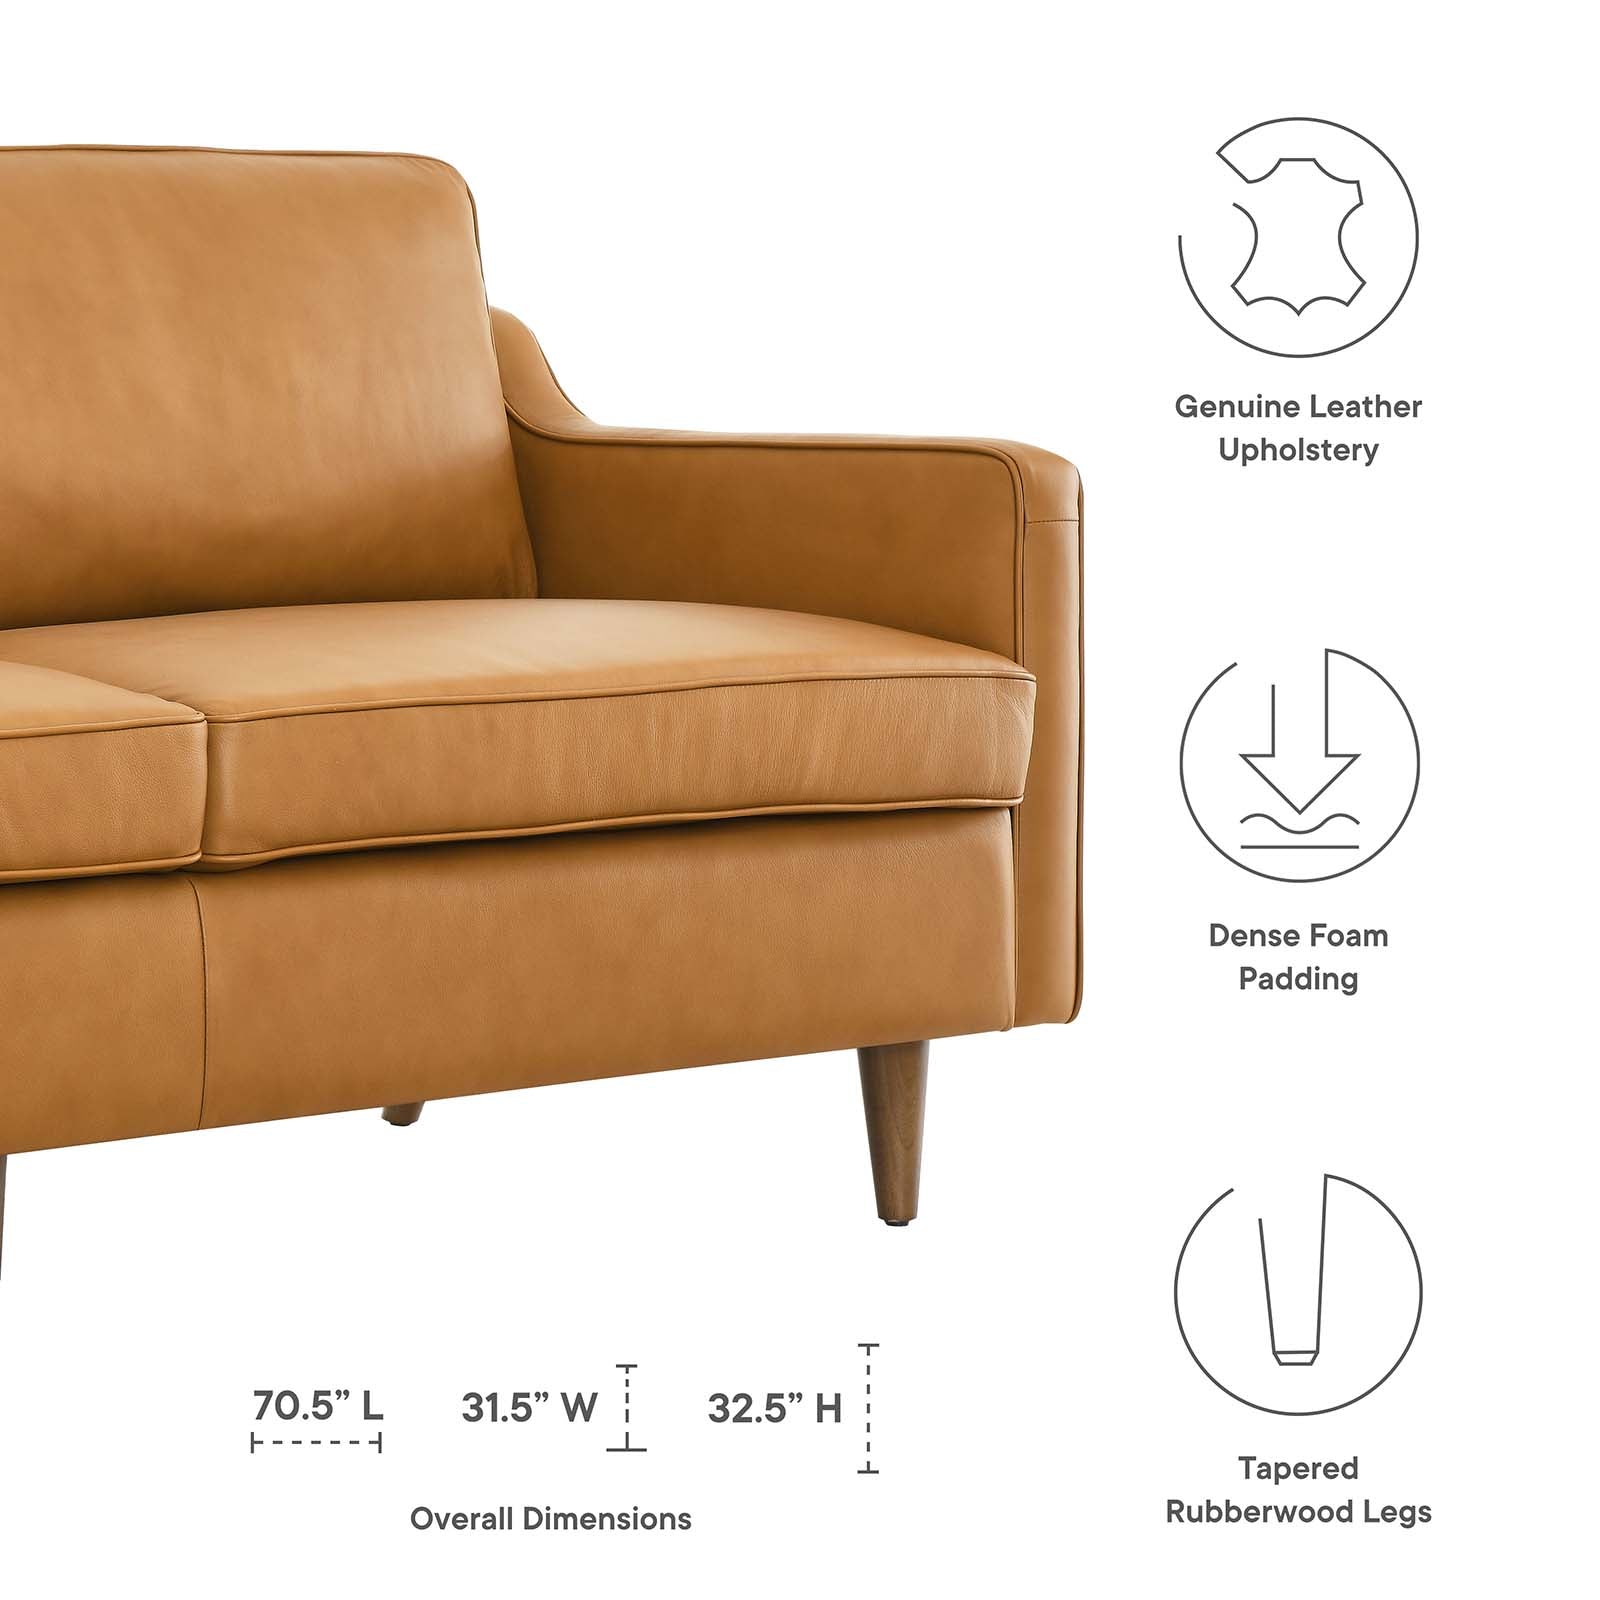 Impart Genuine Leather Sofa - East Shore Modern Home Furnishings